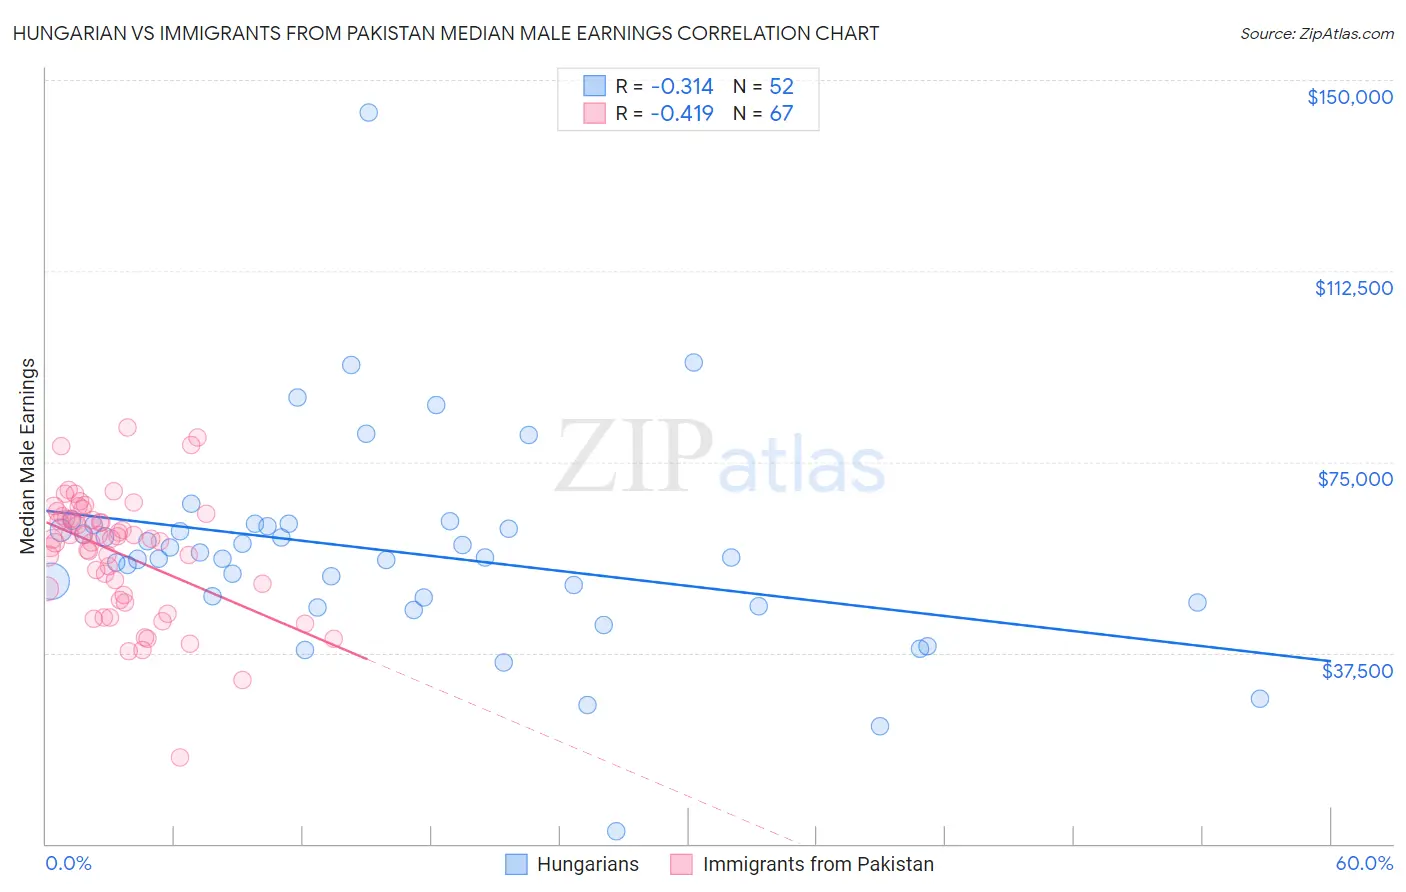 Hungarian vs Immigrants from Pakistan Median Male Earnings